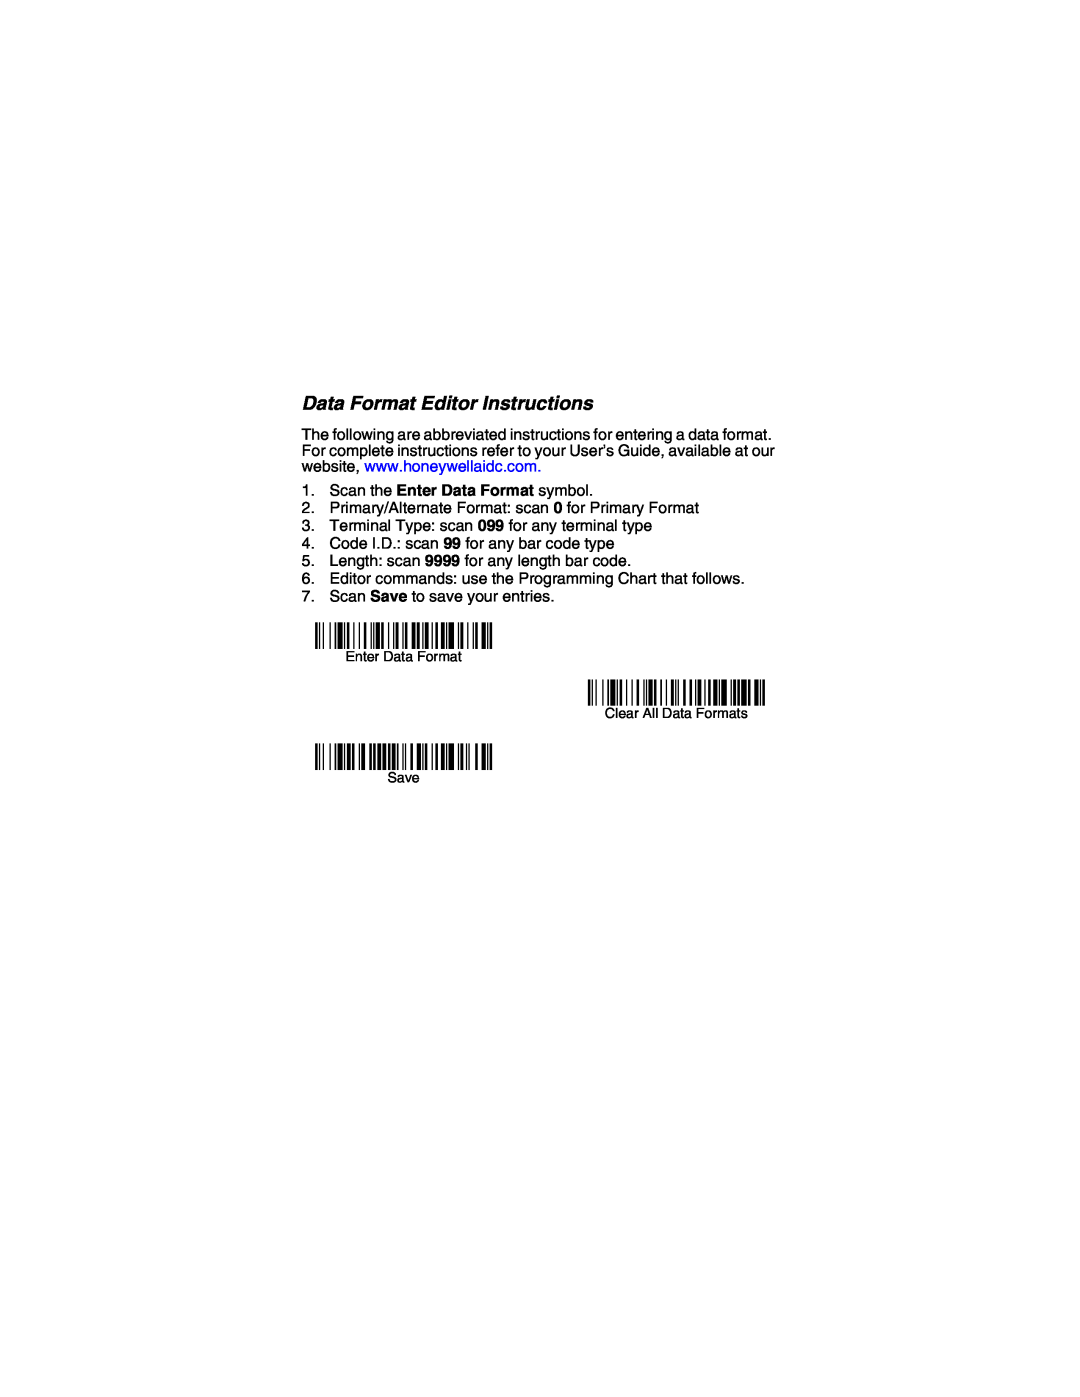 Honeywell Hyperion 1300 g quick start Data Format Editor Instructions, Scan the Enter Data Format symbol 